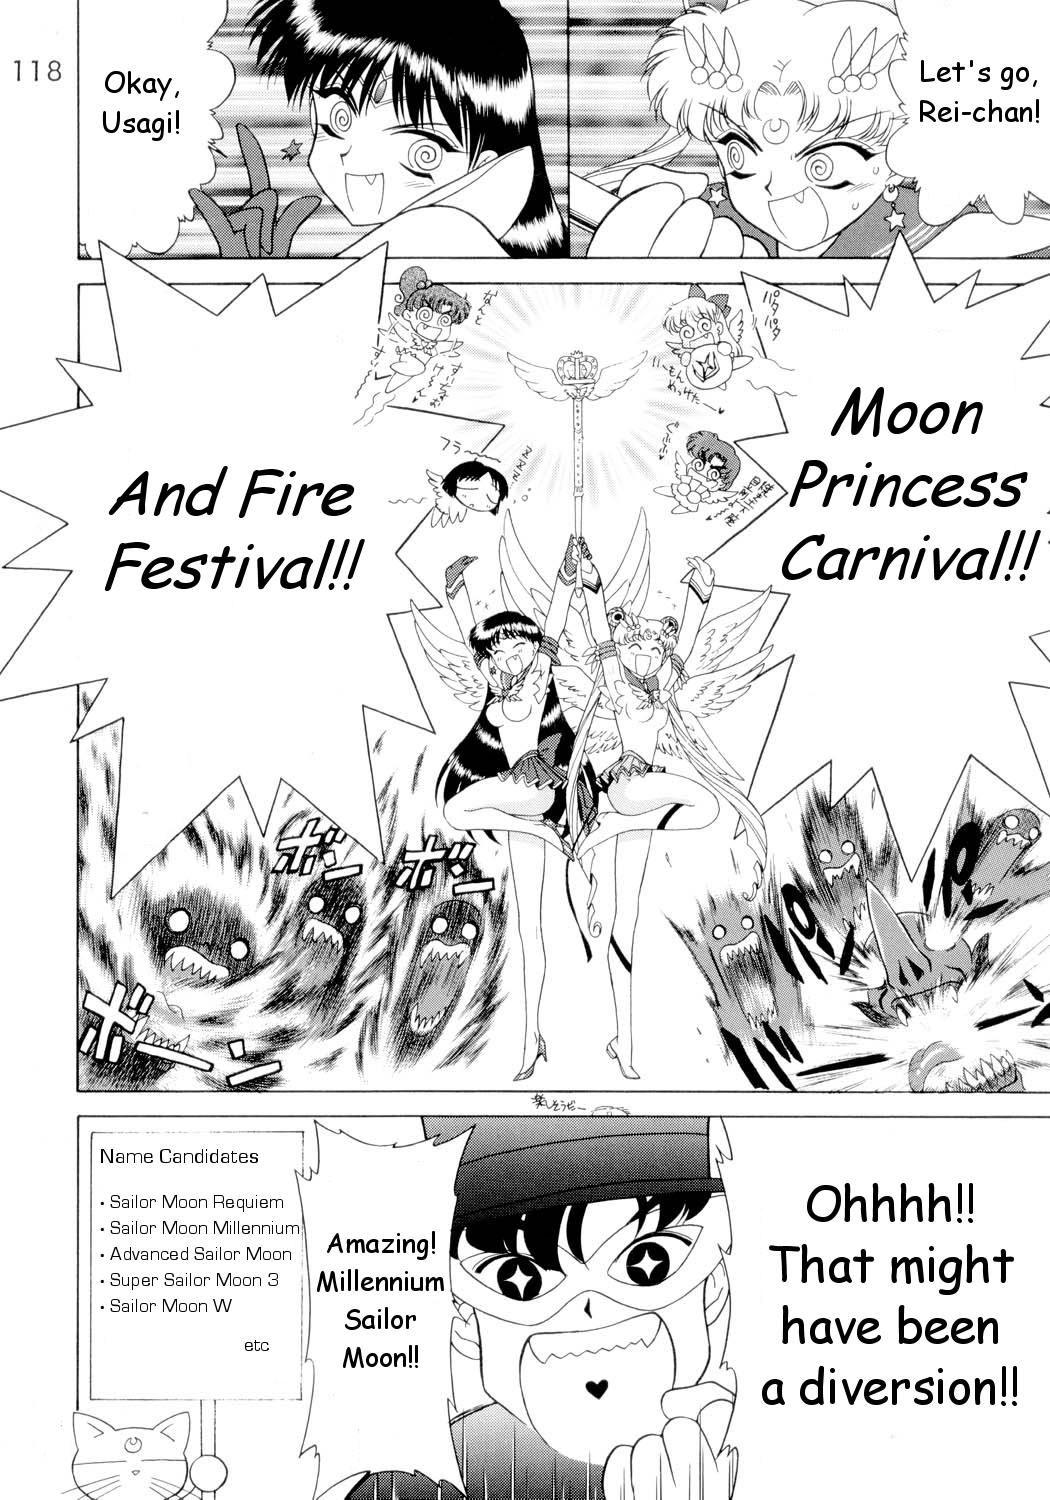 Sailor Moon Dj - Ironman Of Love 1 Manga Page 1 - Read 